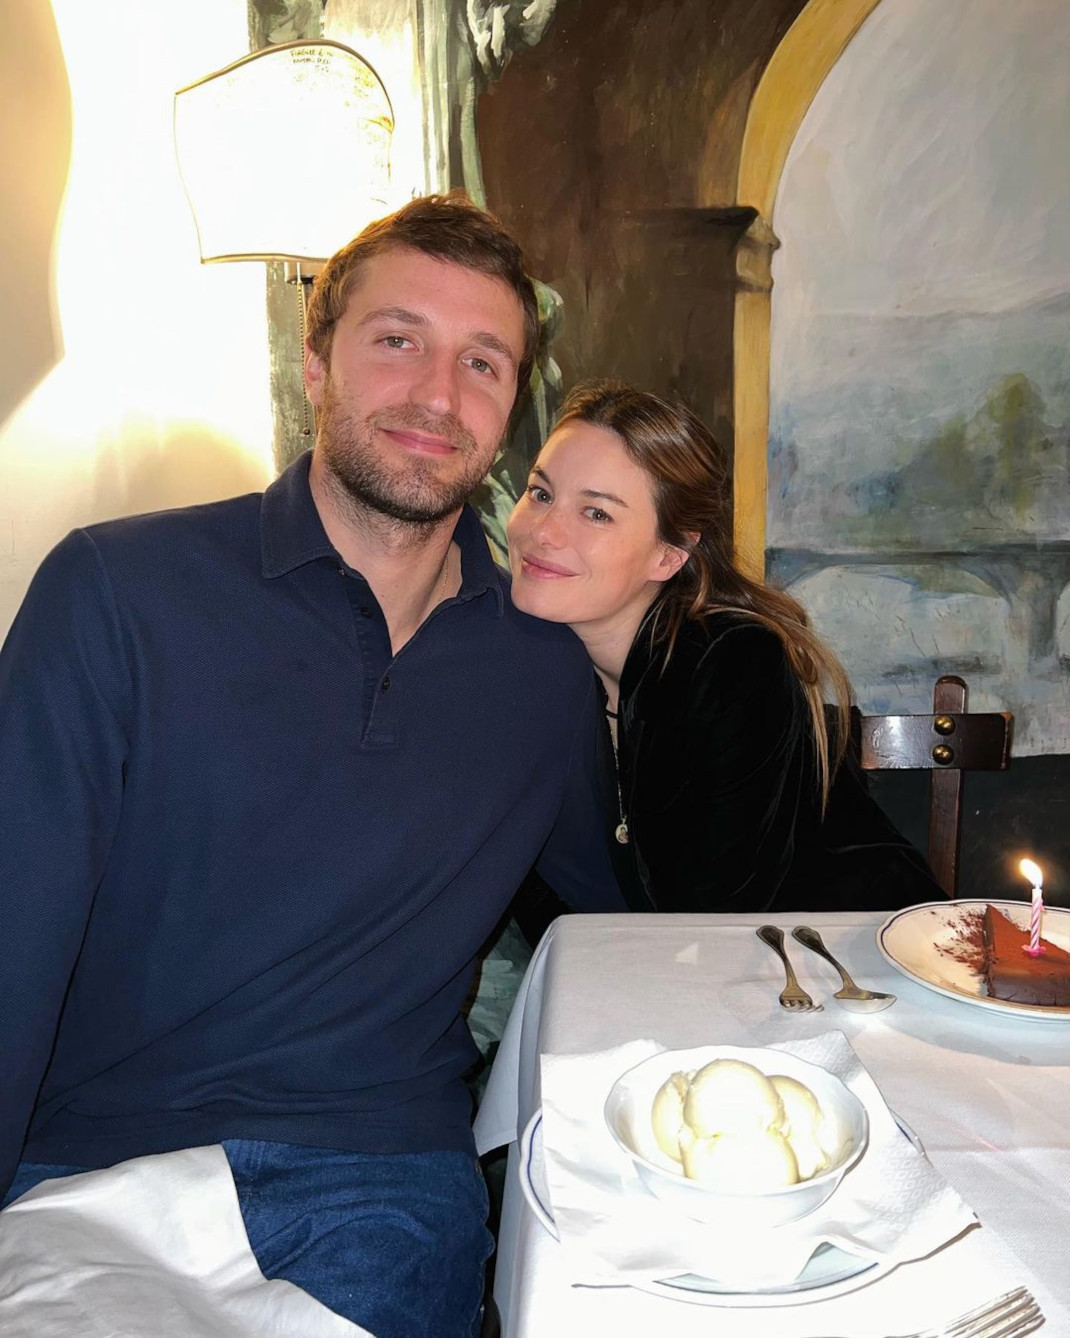 Tεό Νιάρχος: Η σύντροφός του, Καμίλ Ρόου, είχε γενέθλια -Οι φωτό από το ταξίδι τους στην Ιταλία 